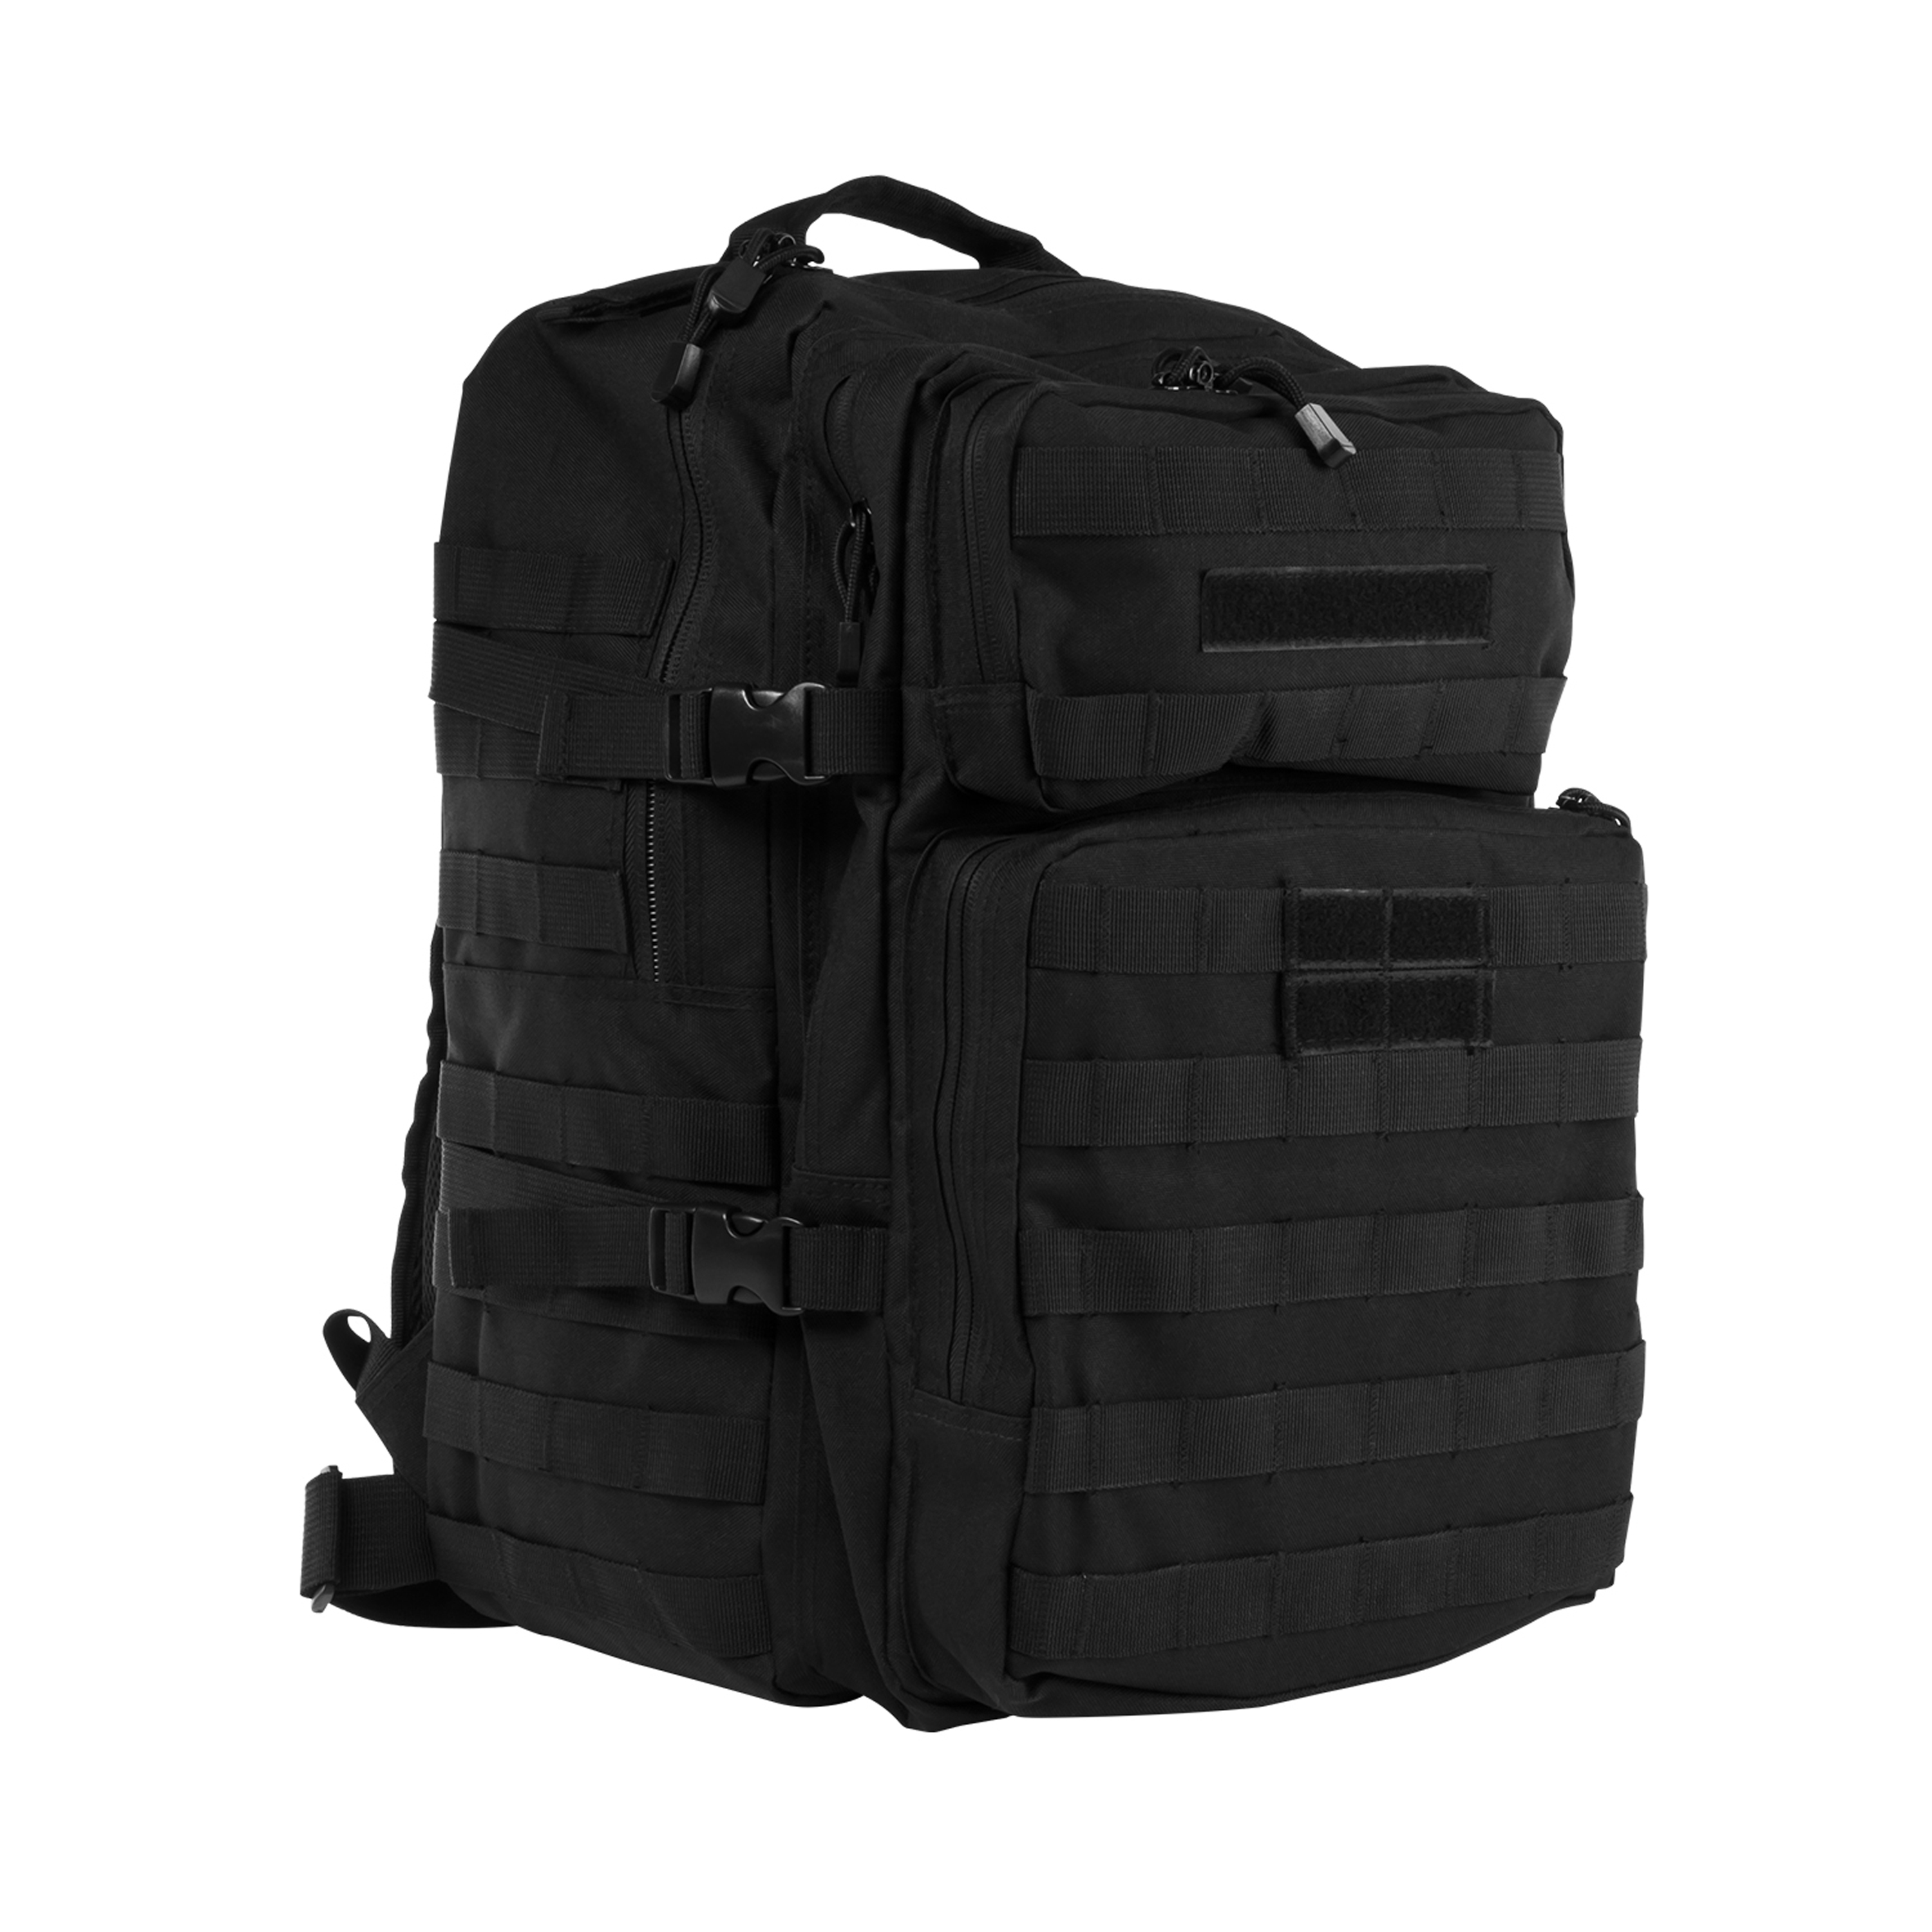 Assault Backpack - image 1 of 3